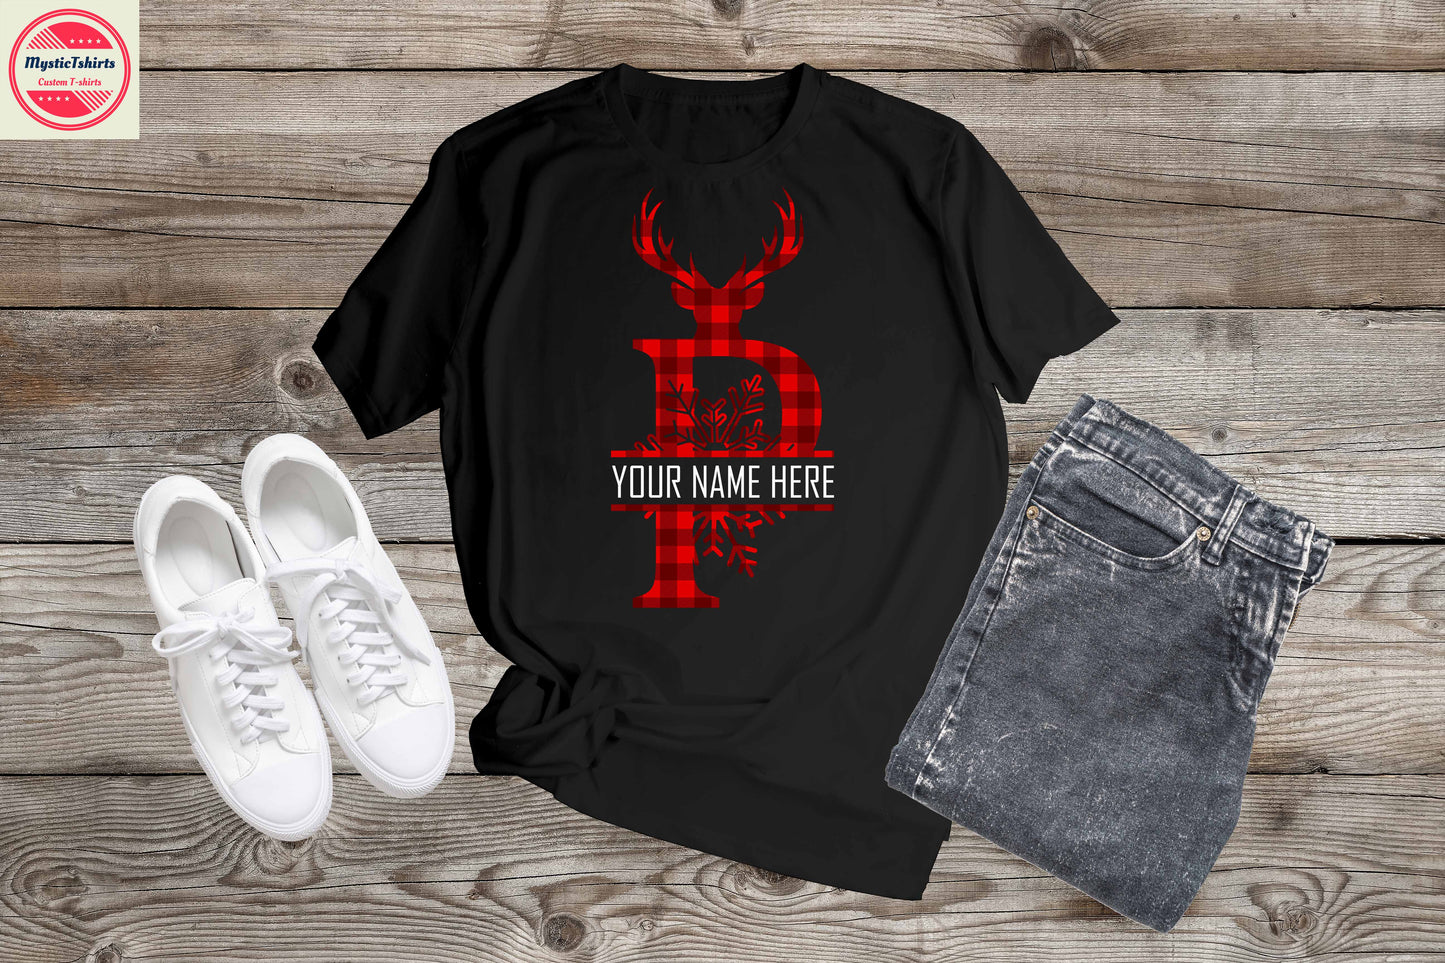 362. MONOGRAMMED RED REINDEER CHRISTMAS P, Custom Made Shirt, Personalized T-Shirt, Custom Text, Make Your Own Shirt, Custom Tee